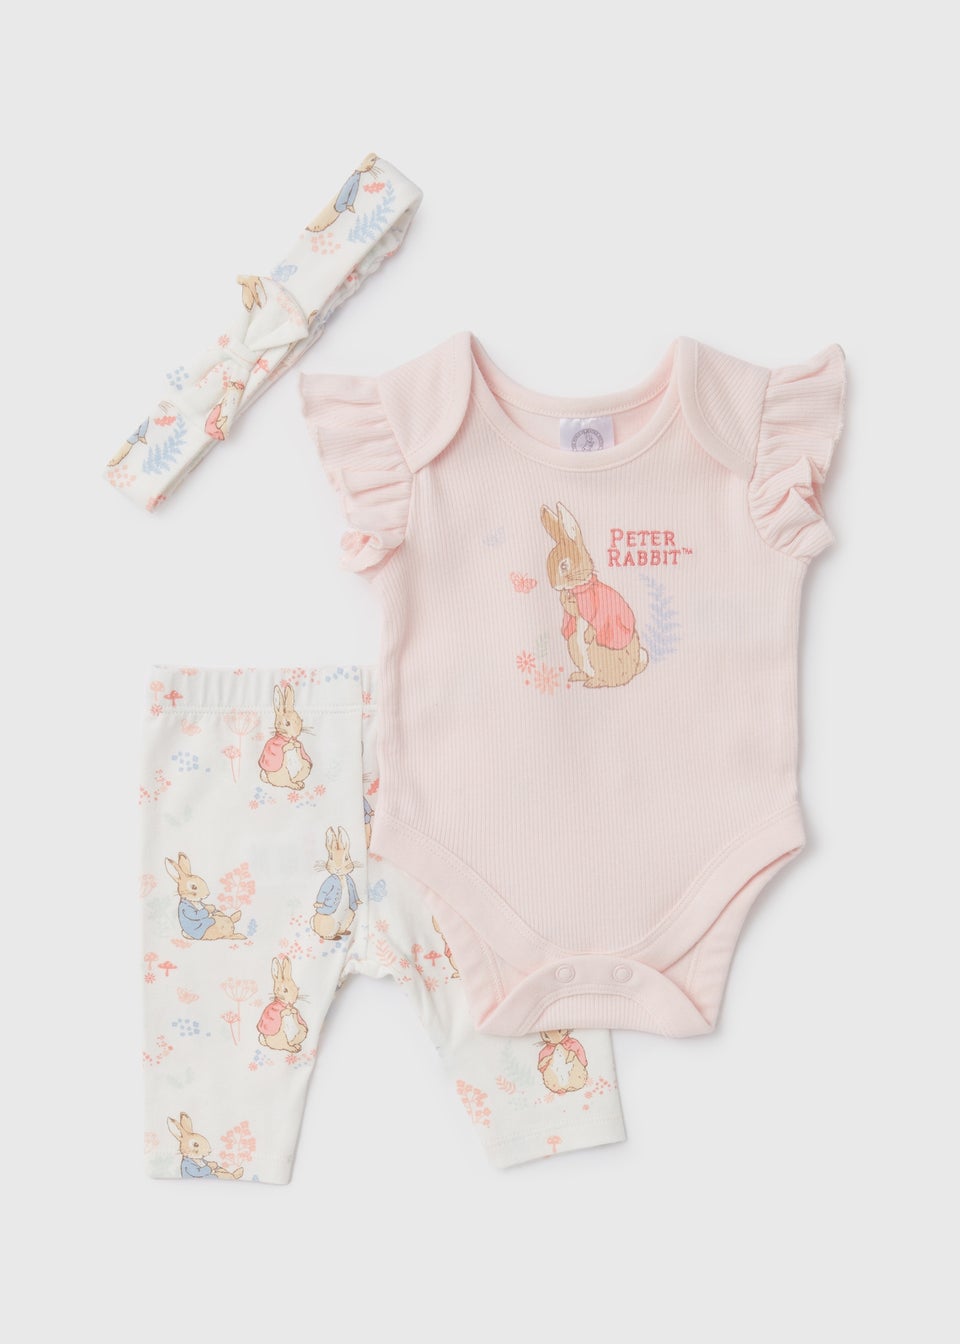 Baby Peter Rabbit Pink 3 Piece Bodysuit Headband & Leggings Set (Newborn-18mths)